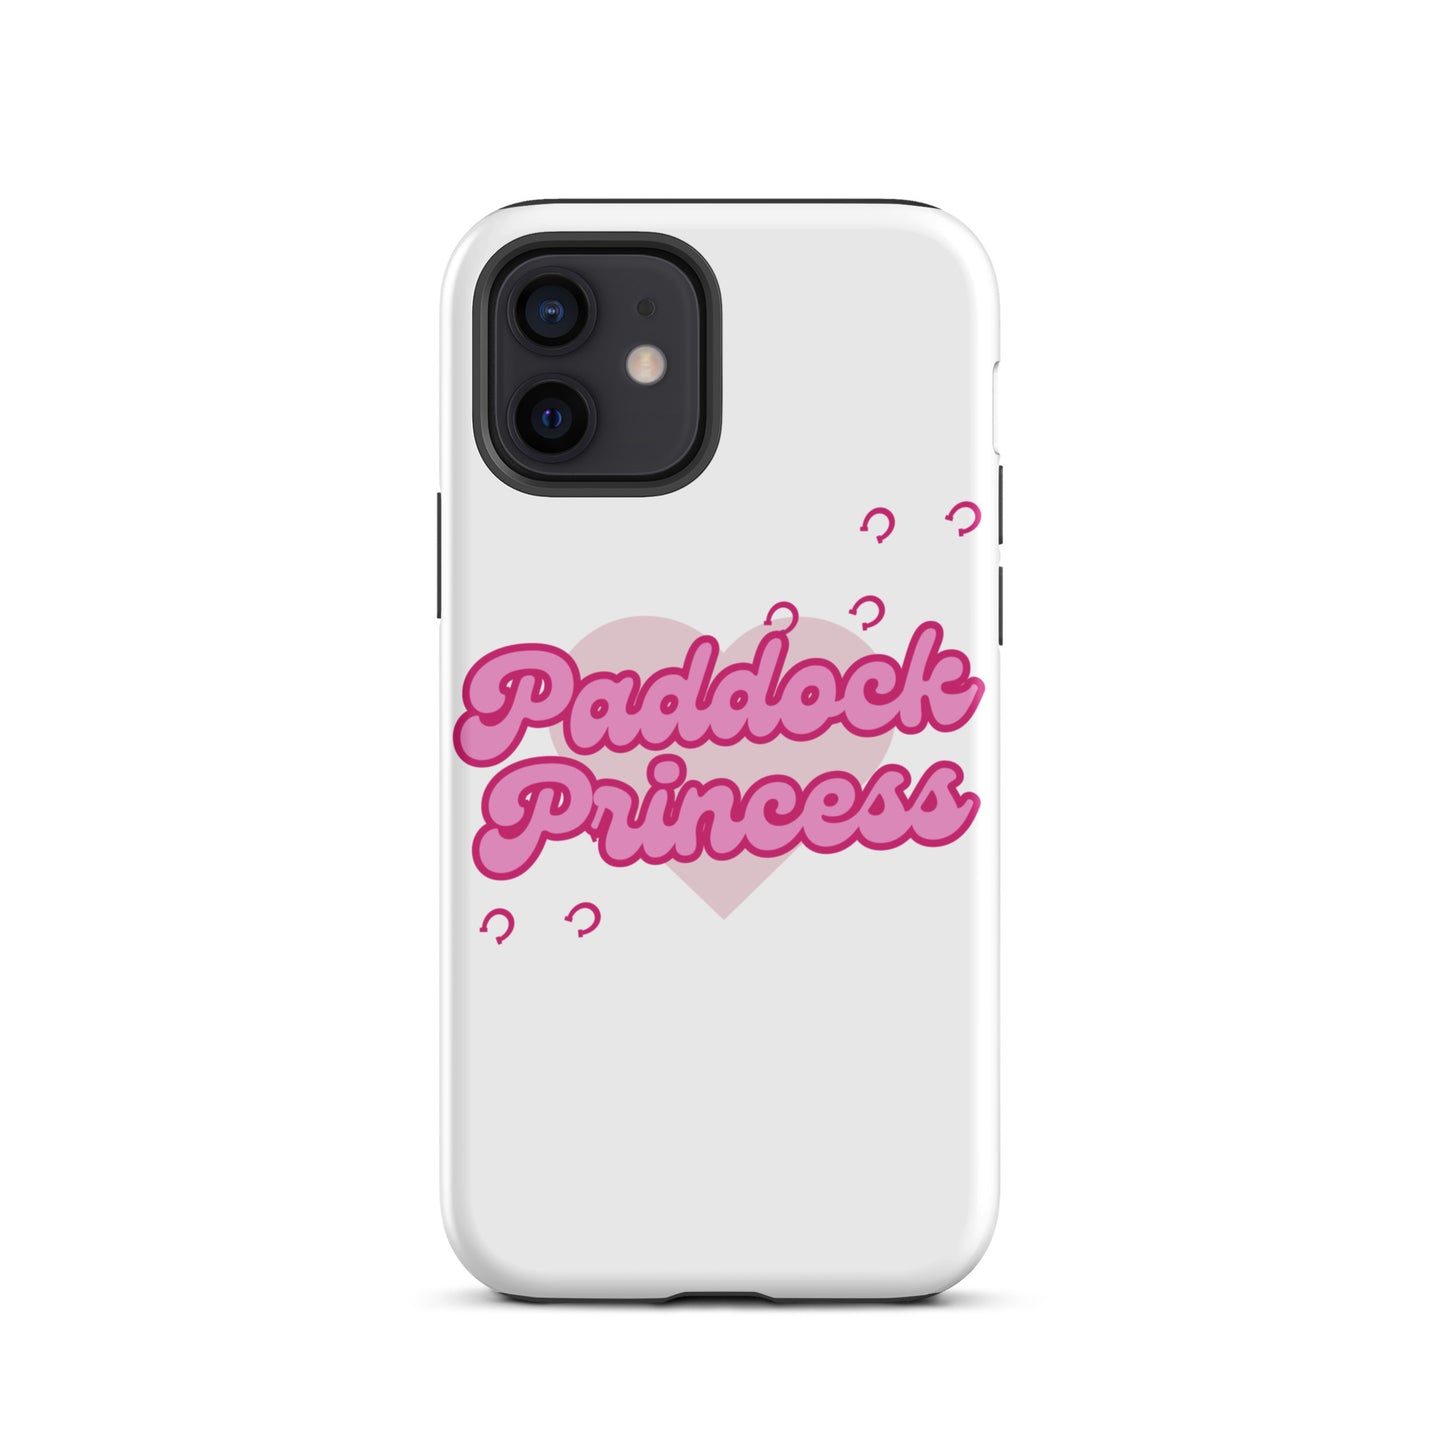 Paddock Princess Phone Case